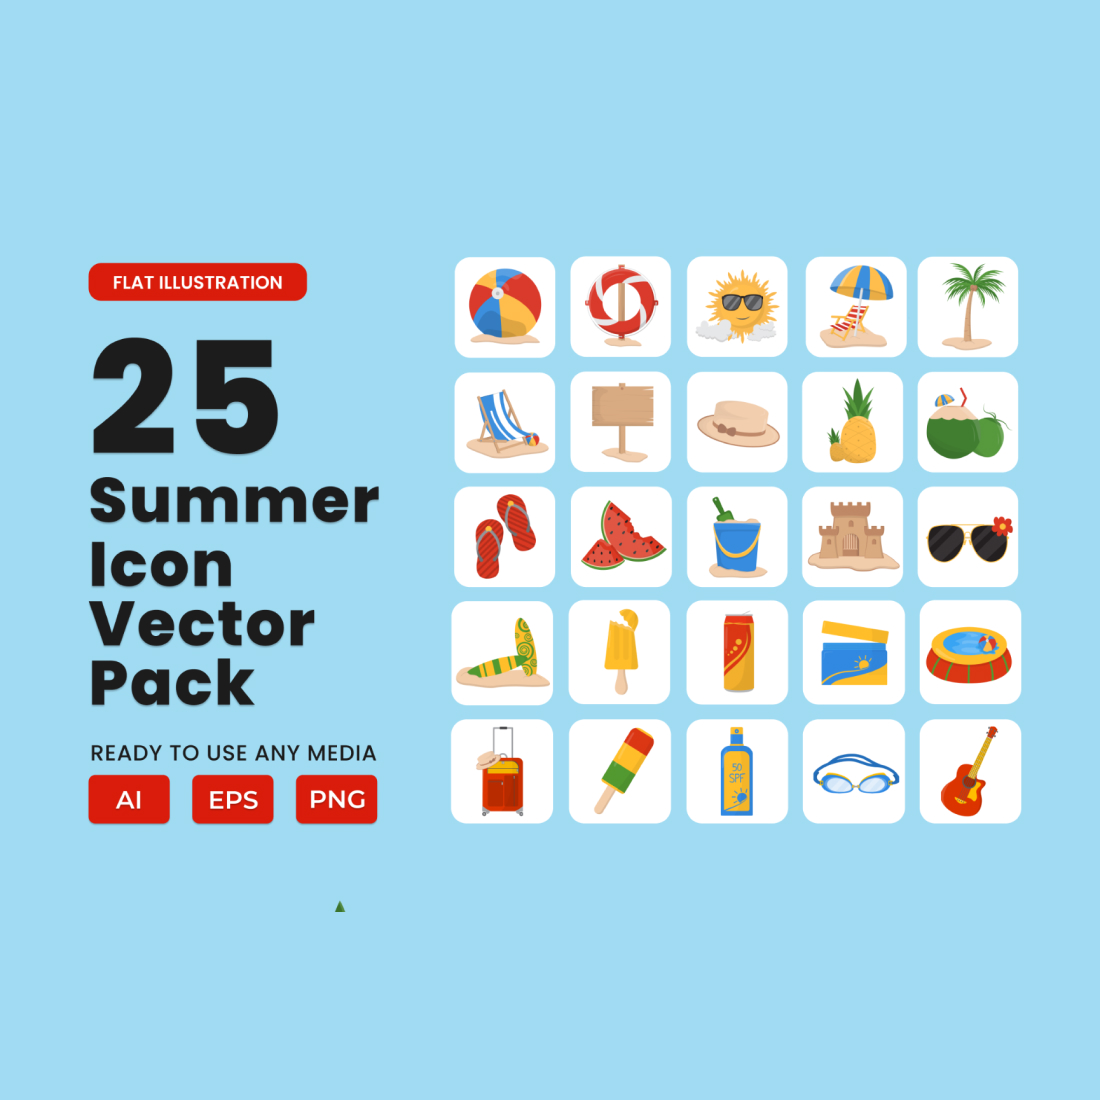 Summer Icon Illustration Set Vol 2 cover image.